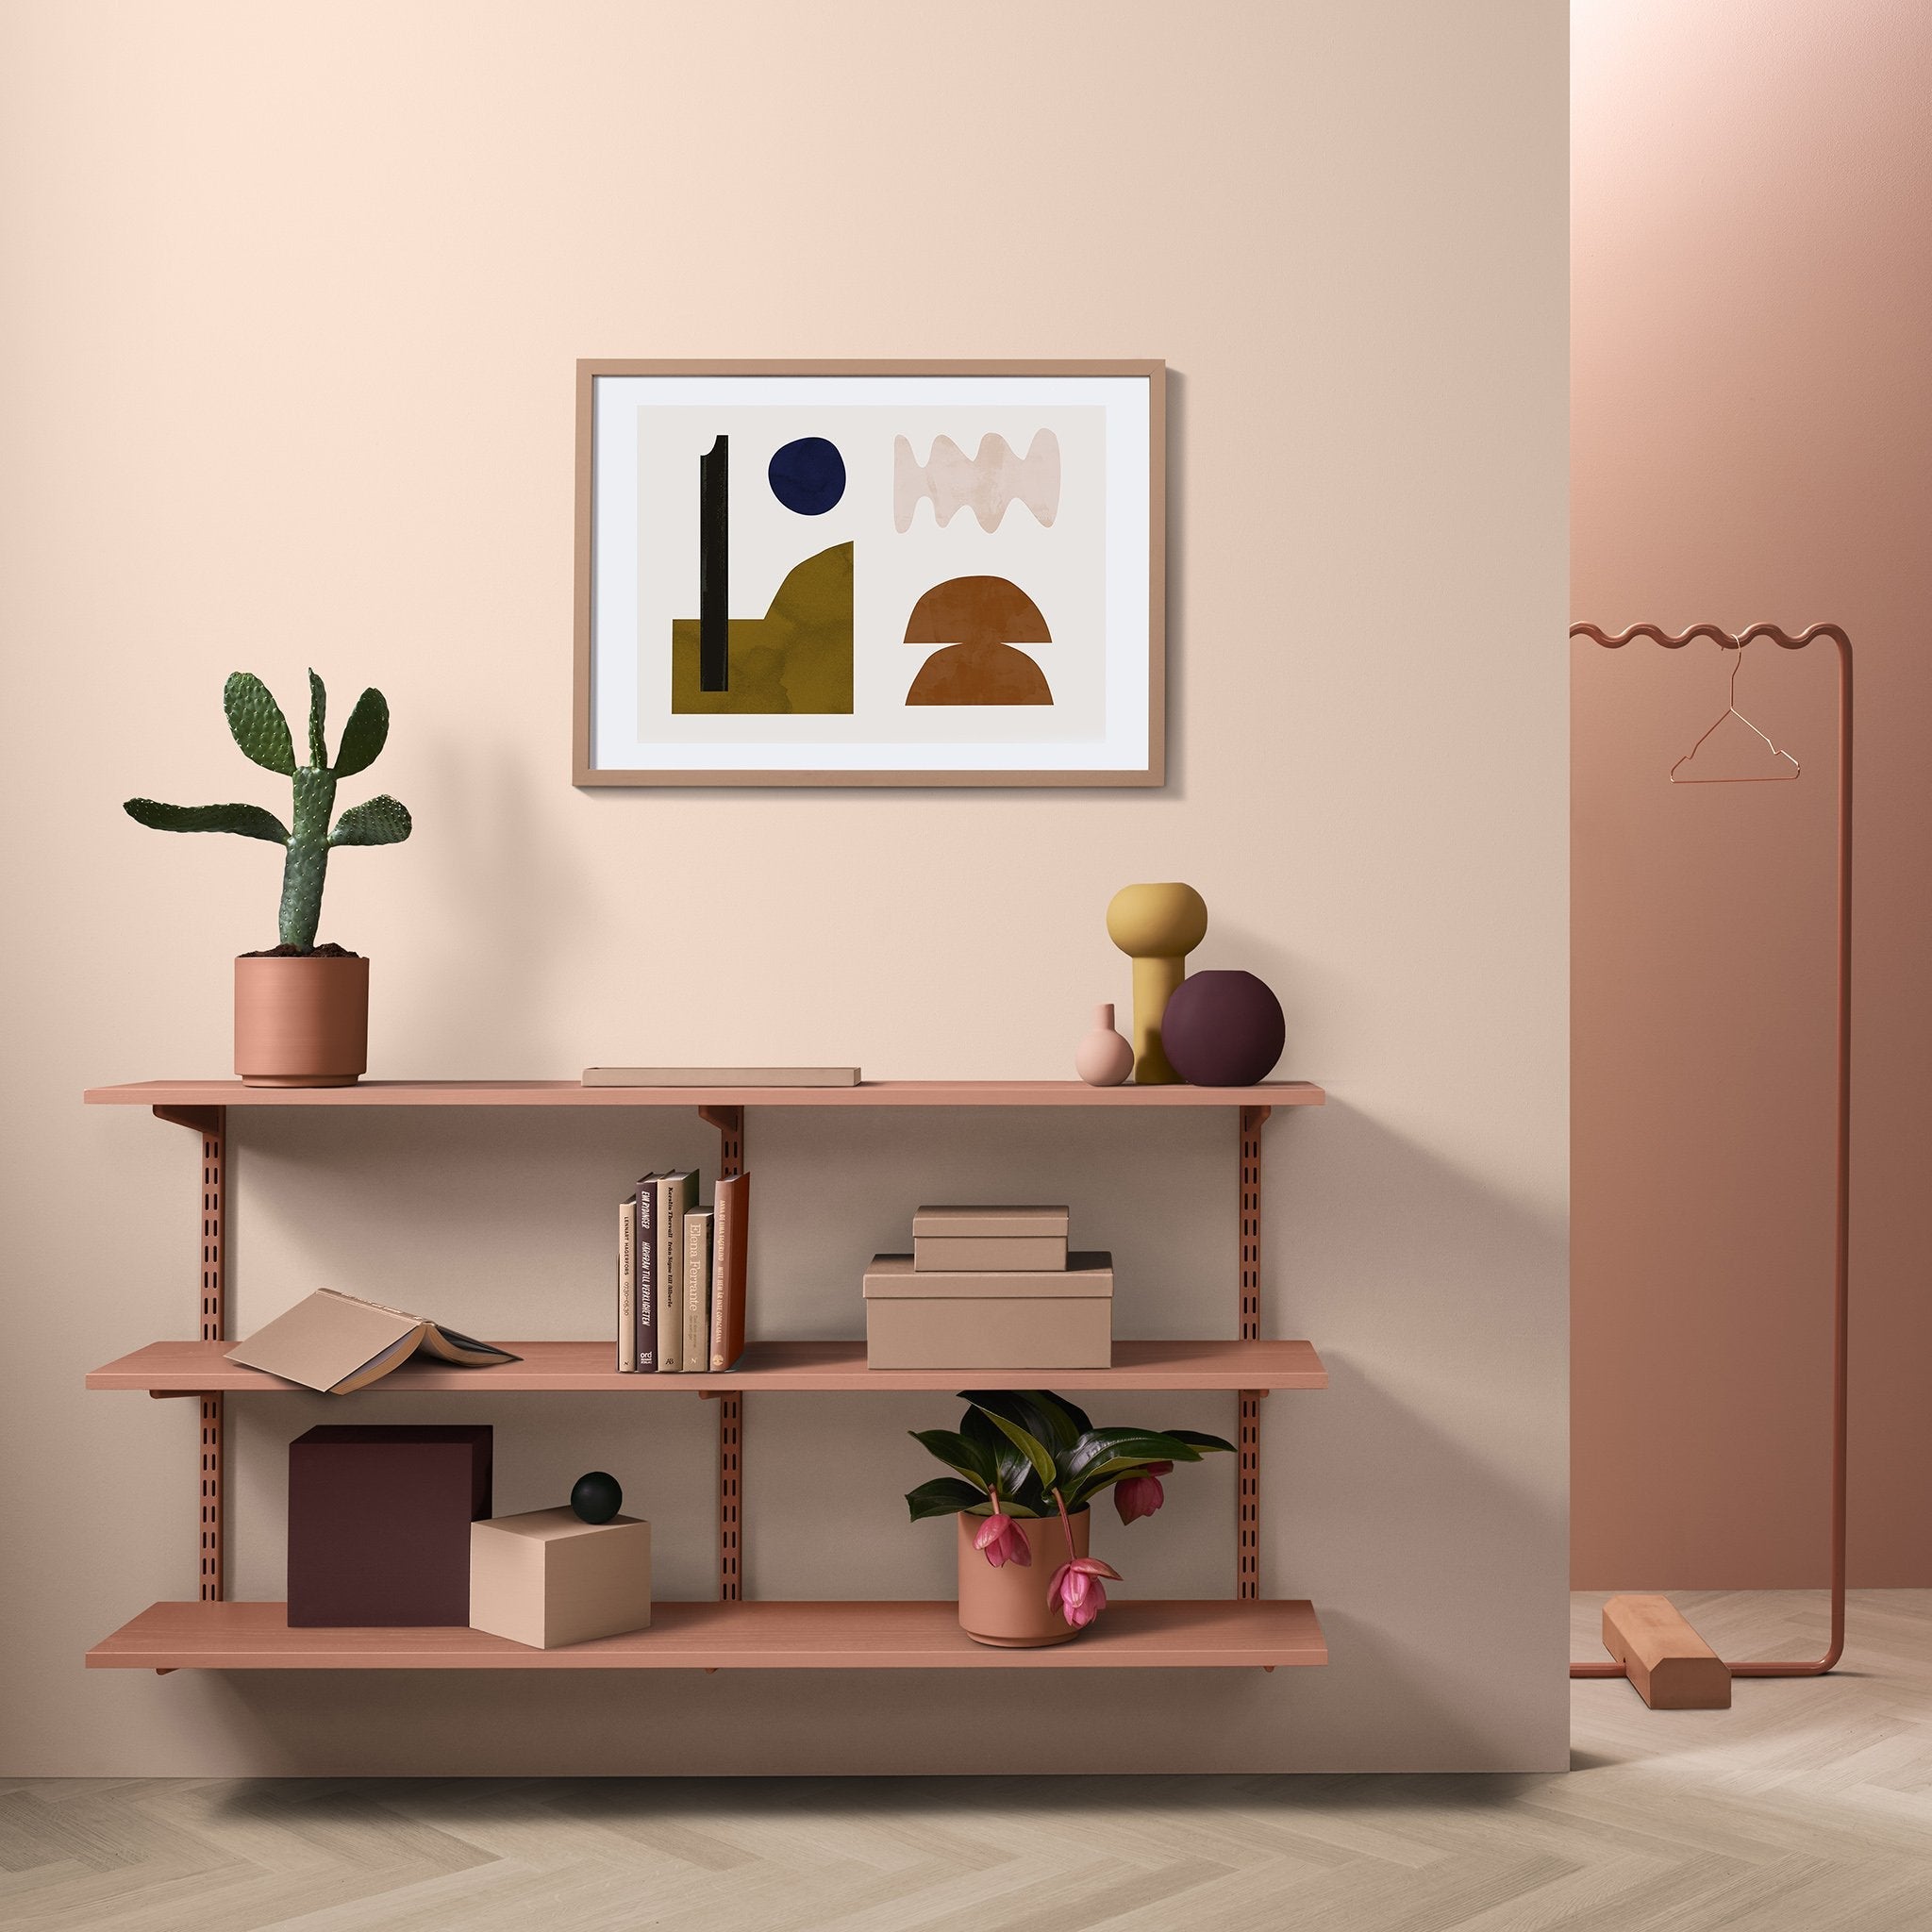 Sparring Shelf System Peach